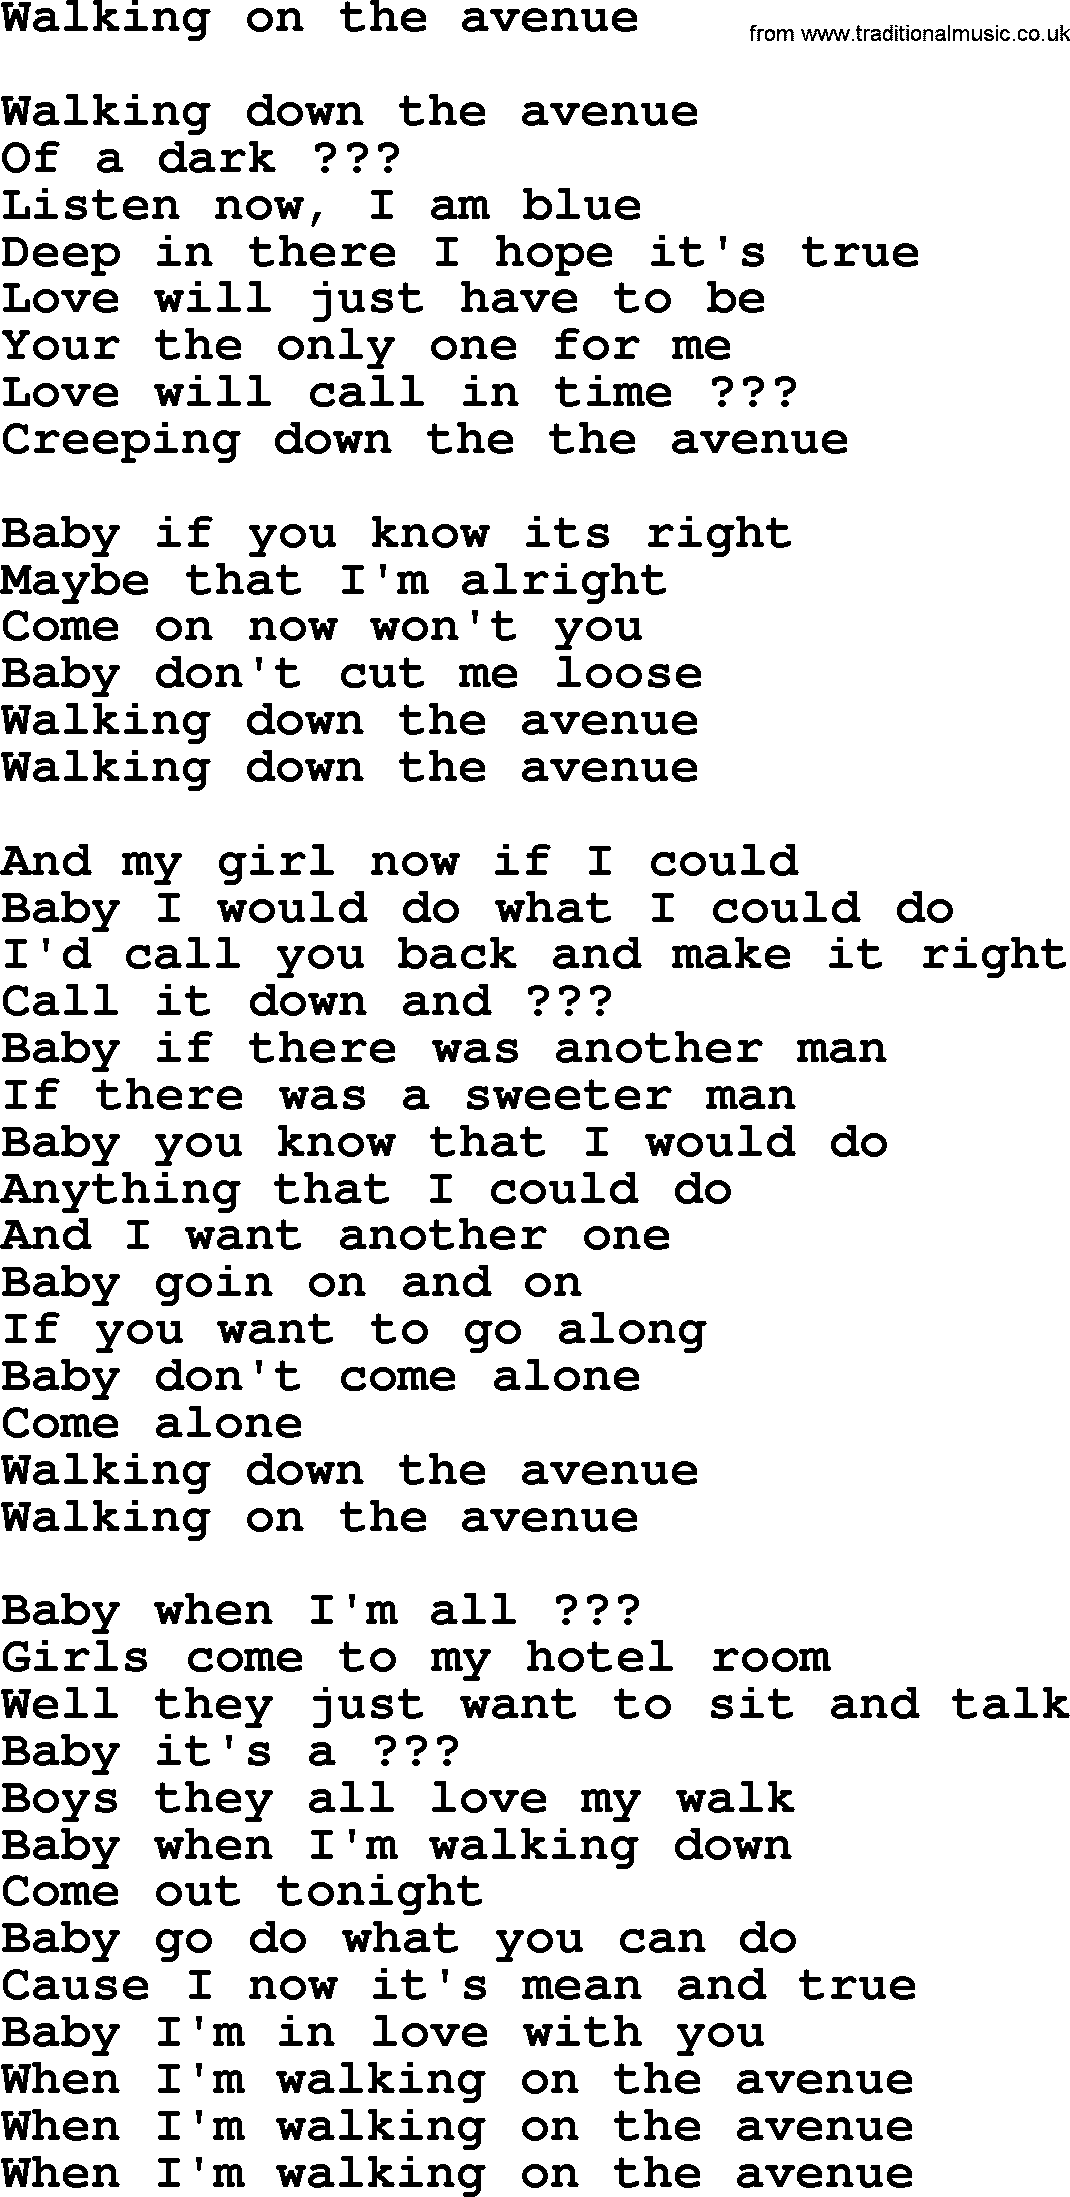 Bruce Springsteen song: Walking On The Avenue lyrics